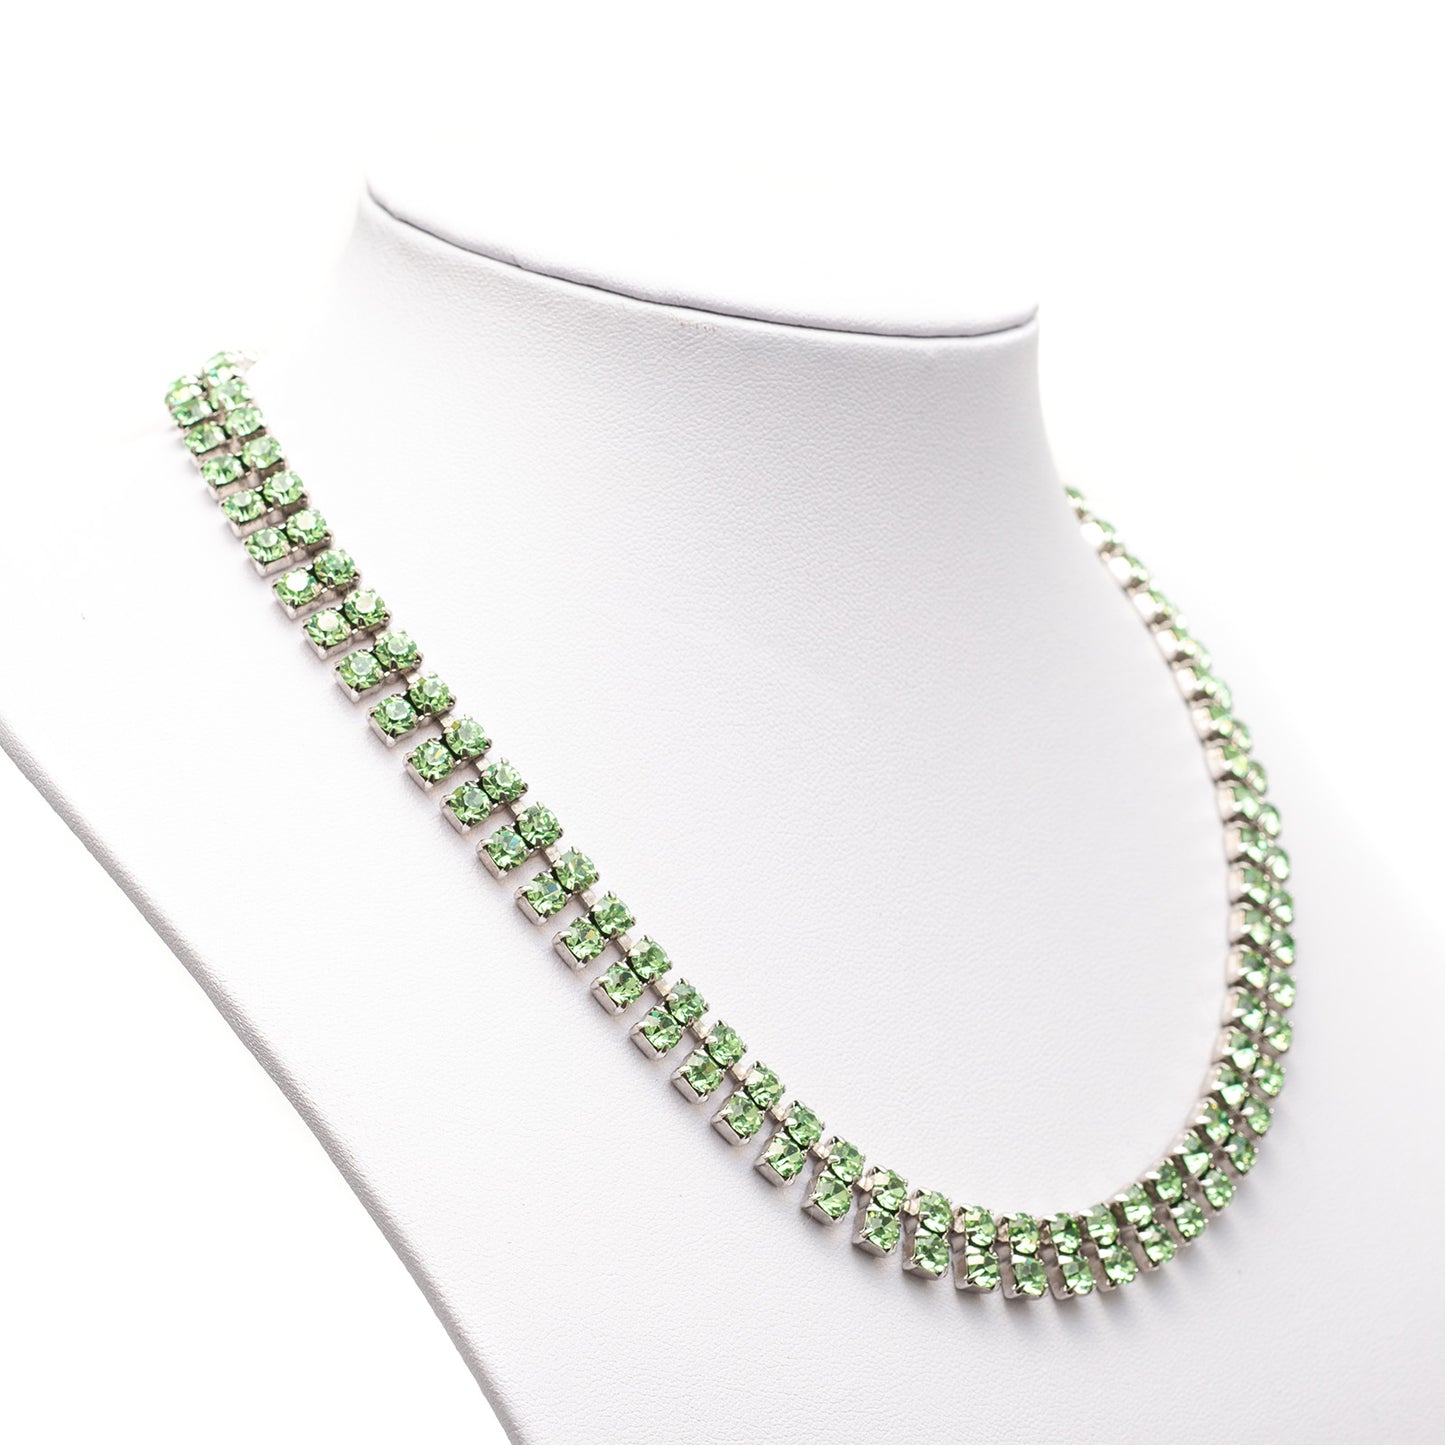 Vintage Art Deco Design Pretty Double Row Green Paste Stones Riviere Necklace (Code A276)